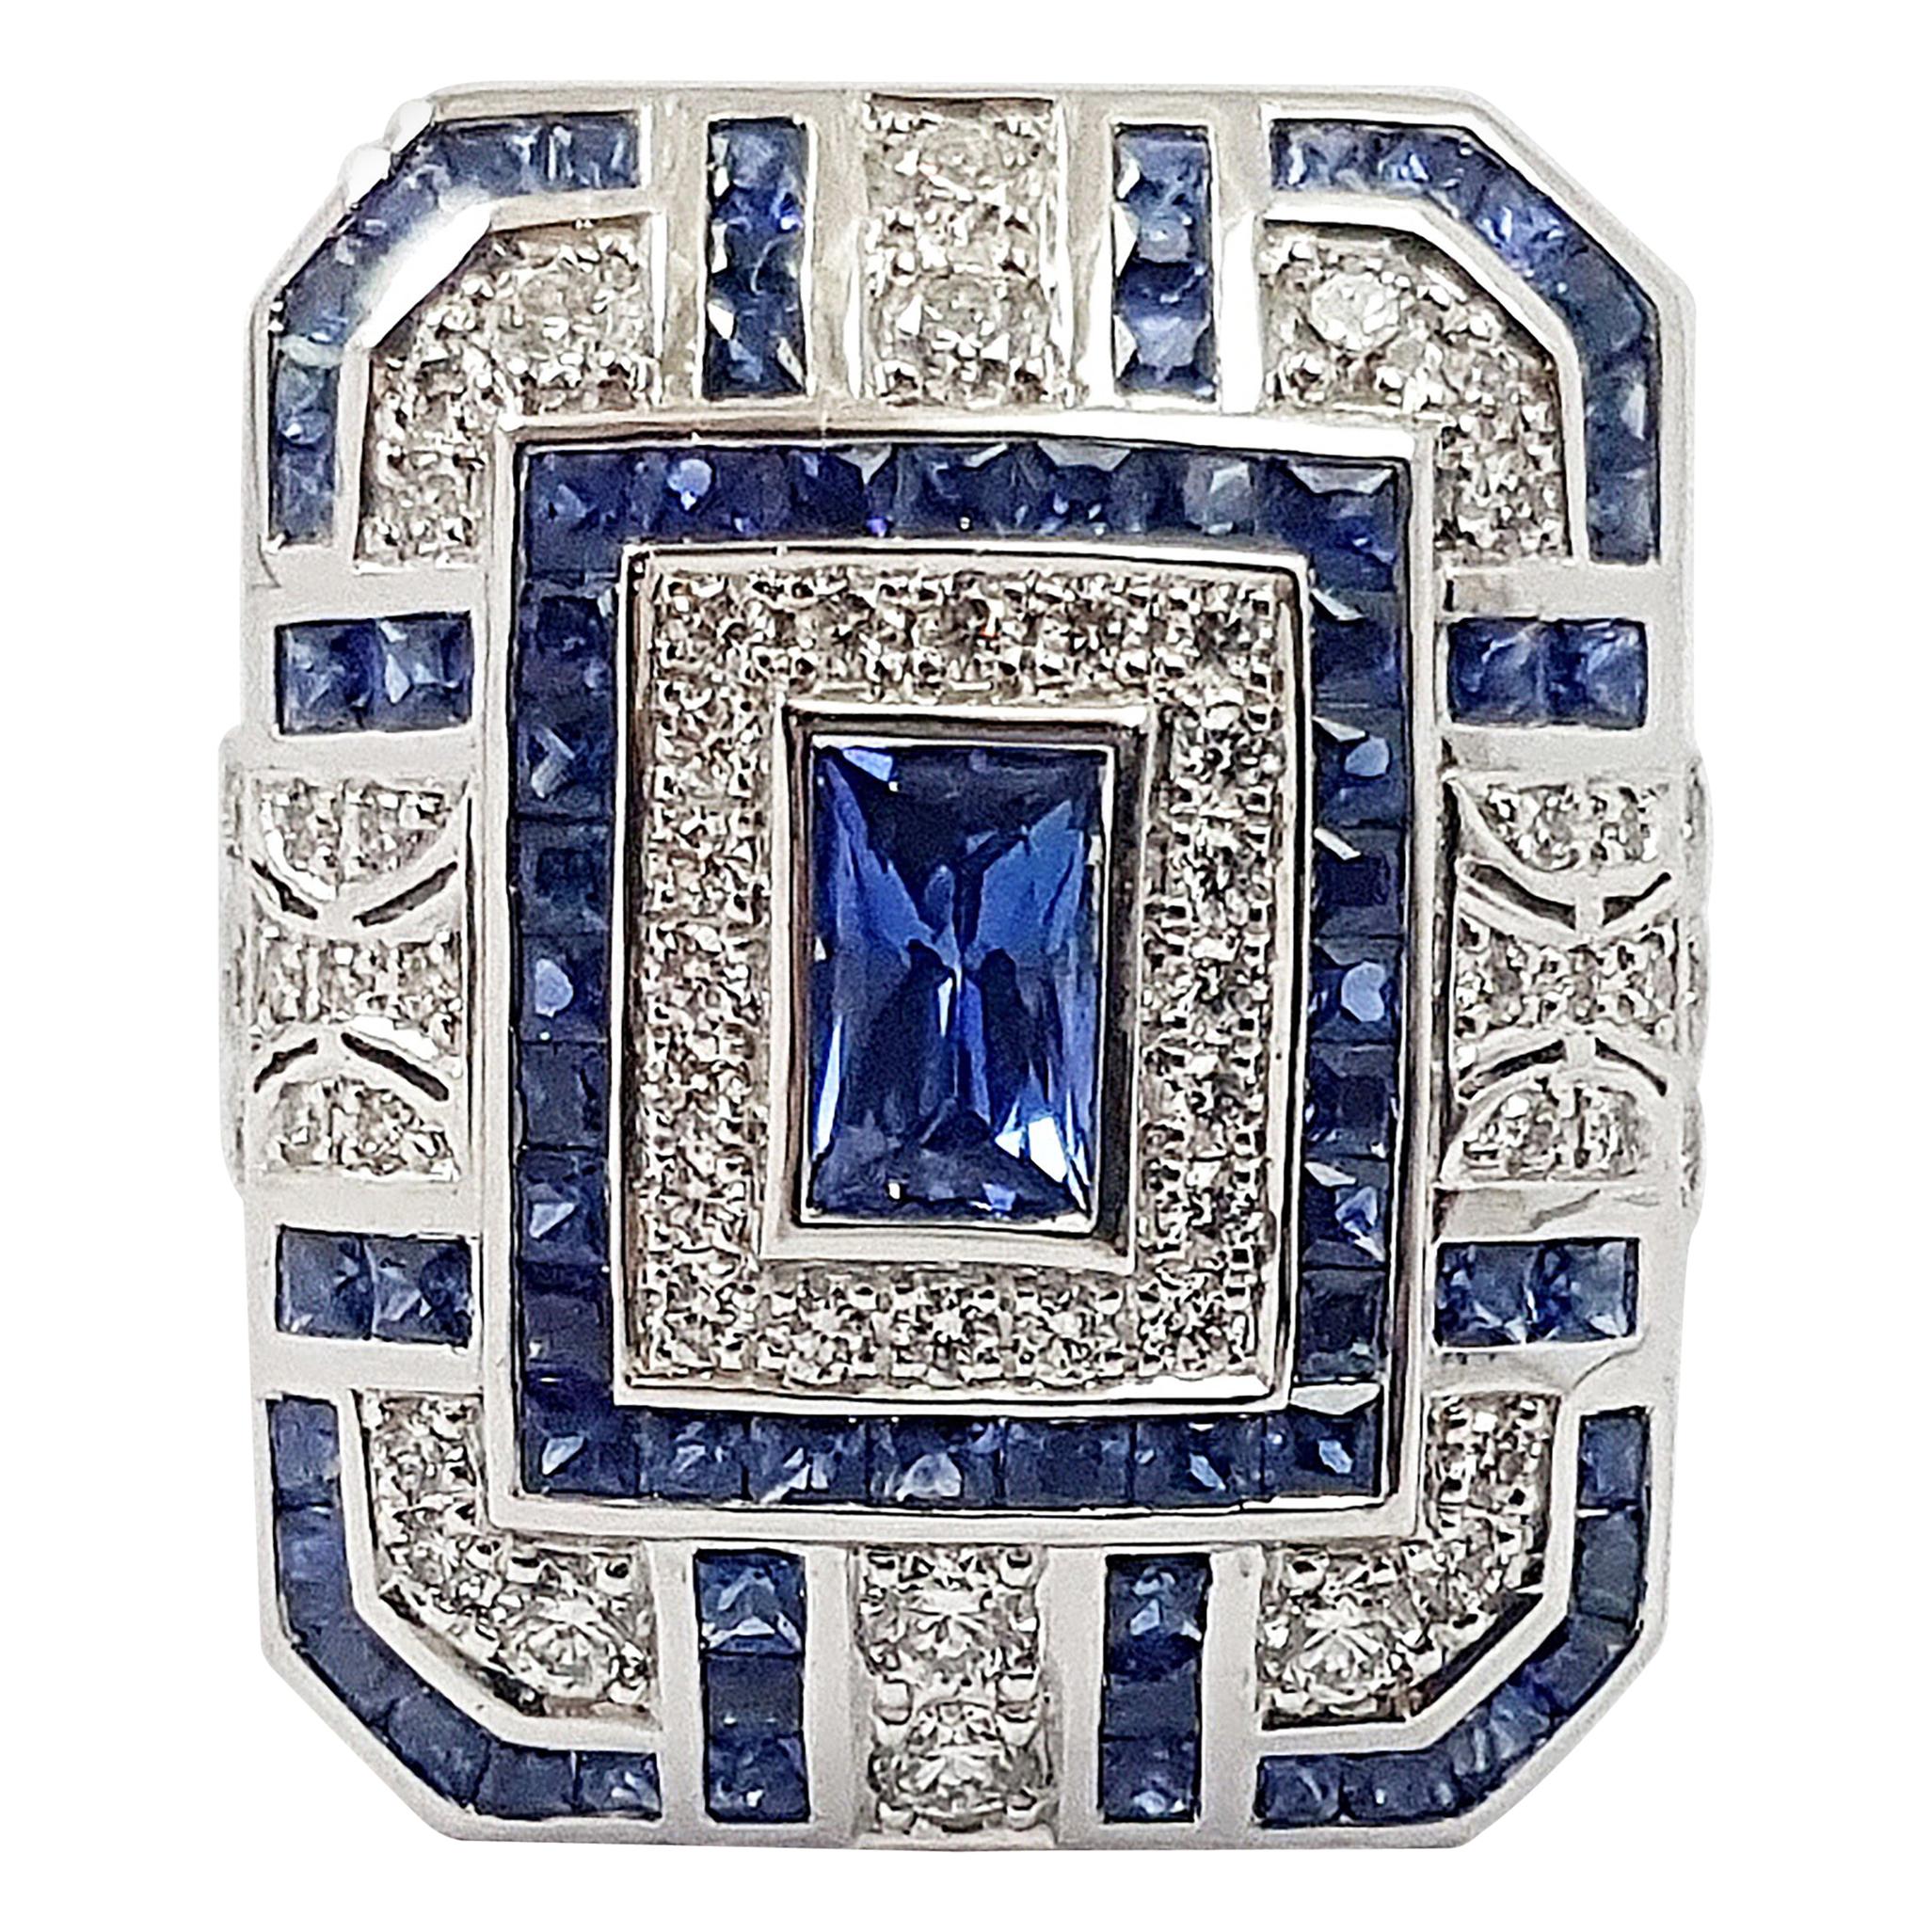 Blue Sapphire with Diamond Ring Set in 18 Karat White Gold Settings